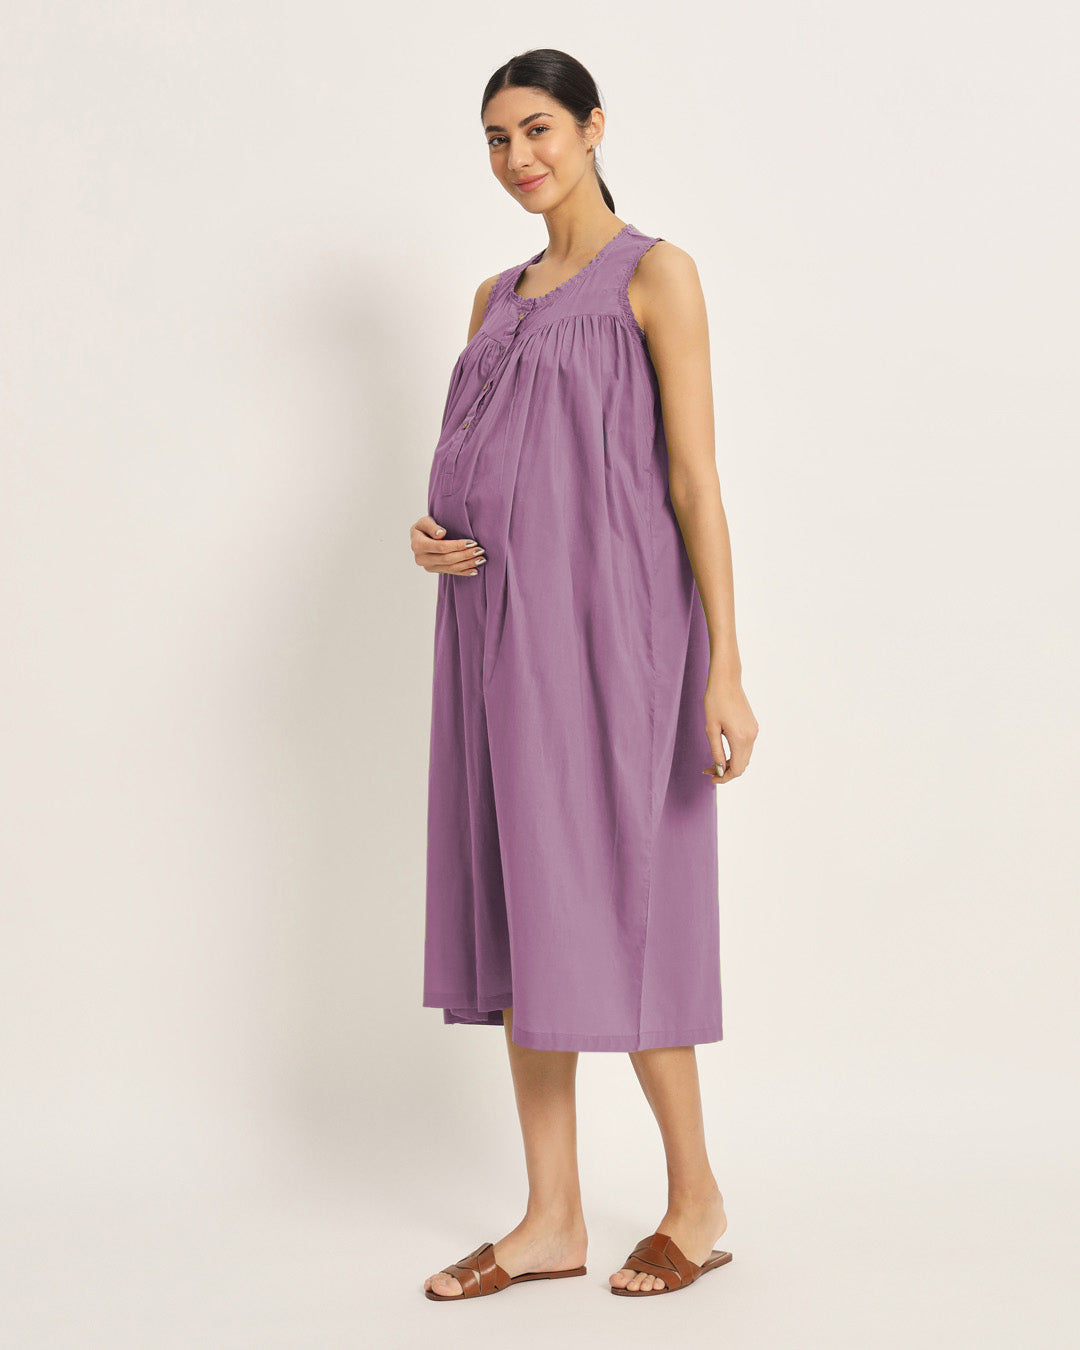 Combo: Black & Iris Pink Pregnan-Queen Maternity & Nursing Dress